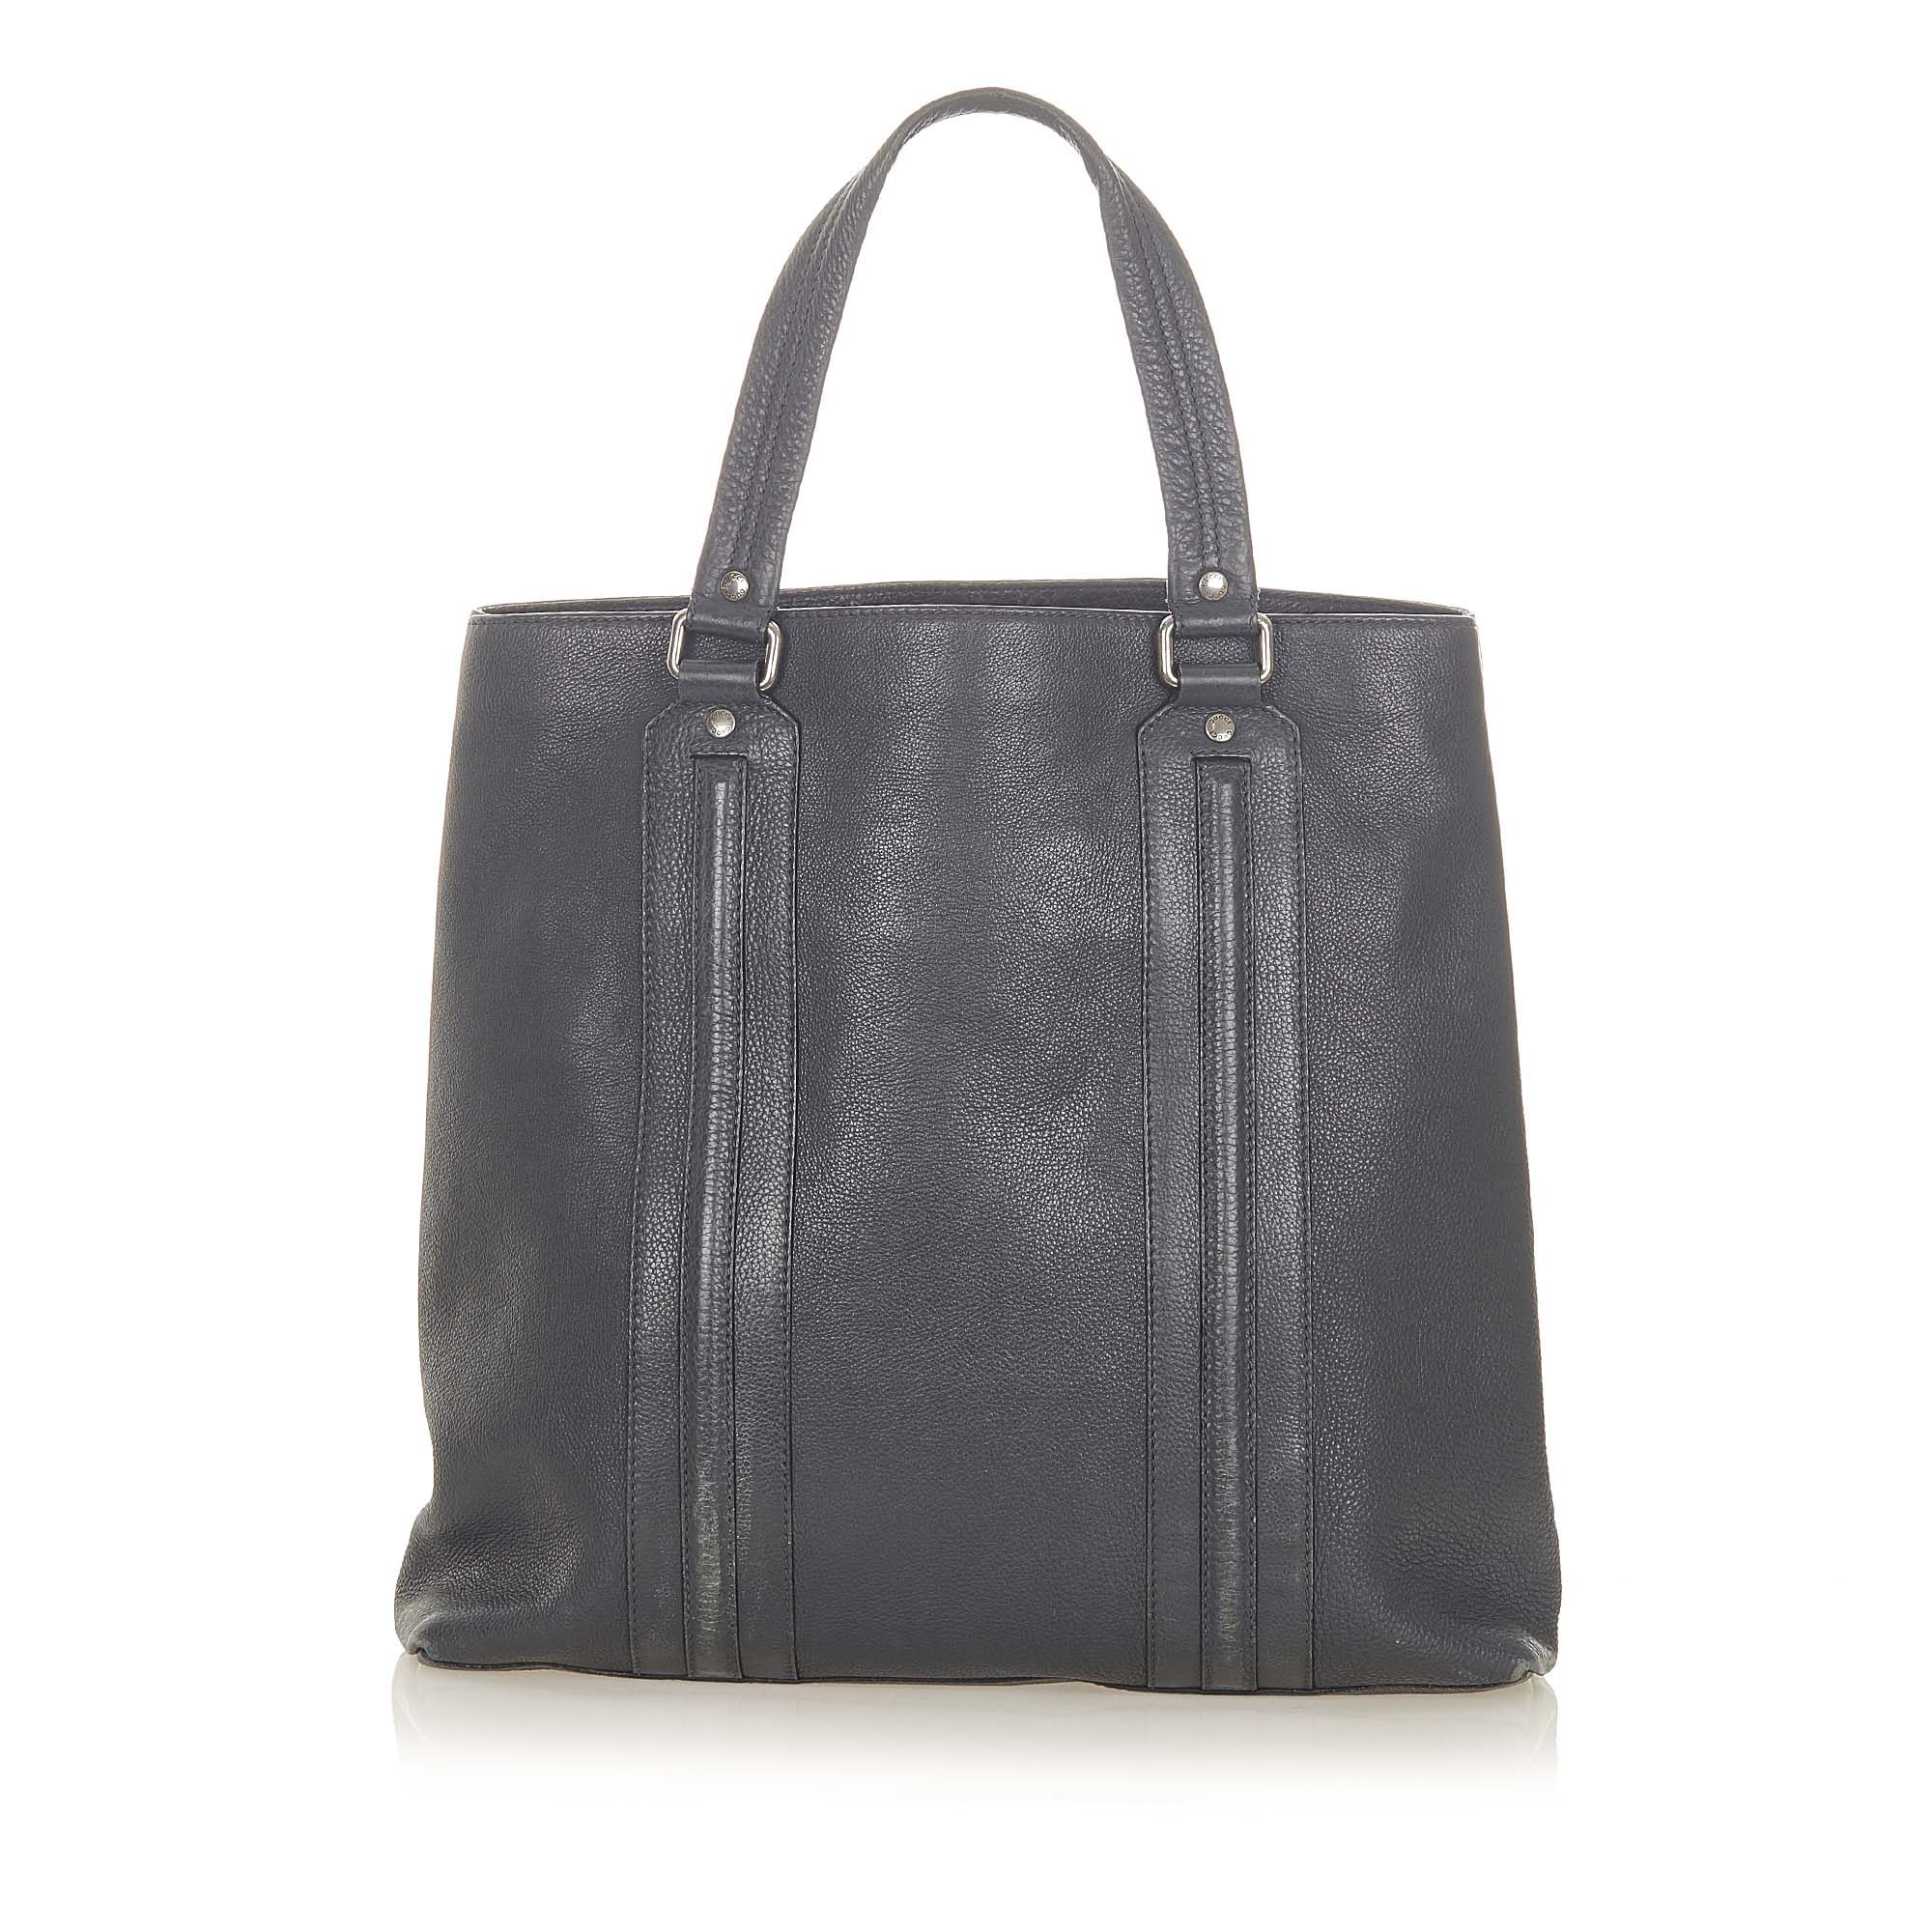 Vintage Gucci Leather Tote Bag Black